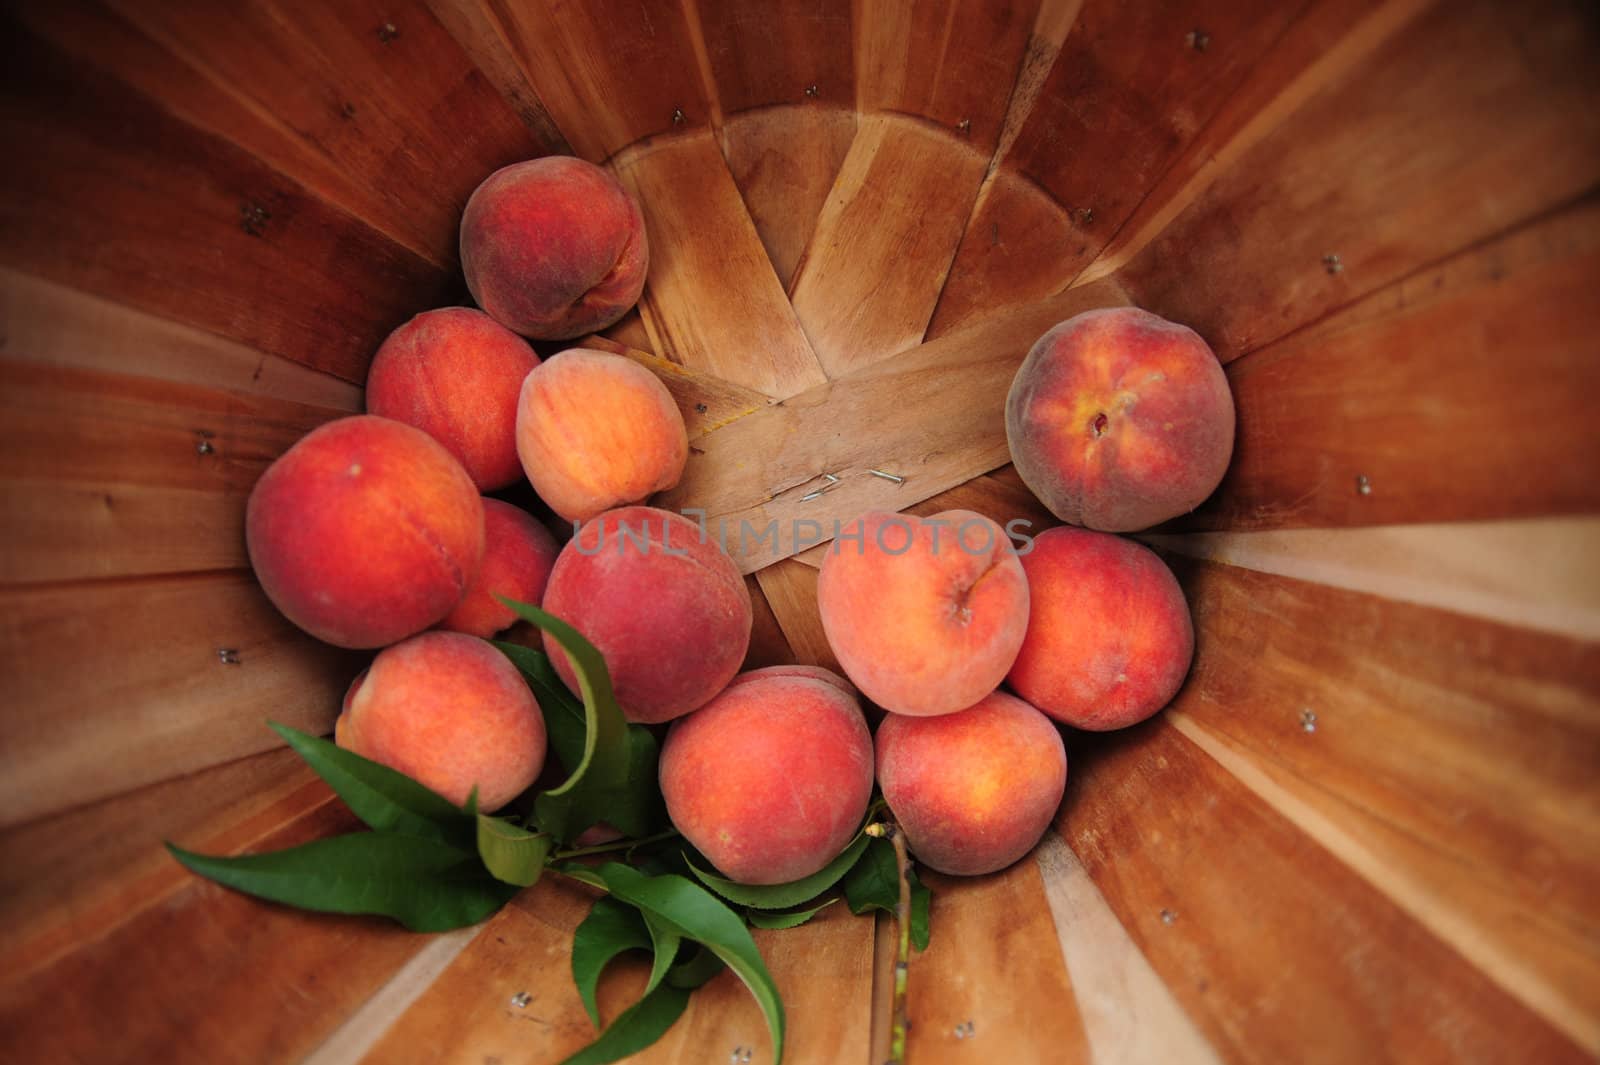 peach in basket by porbital